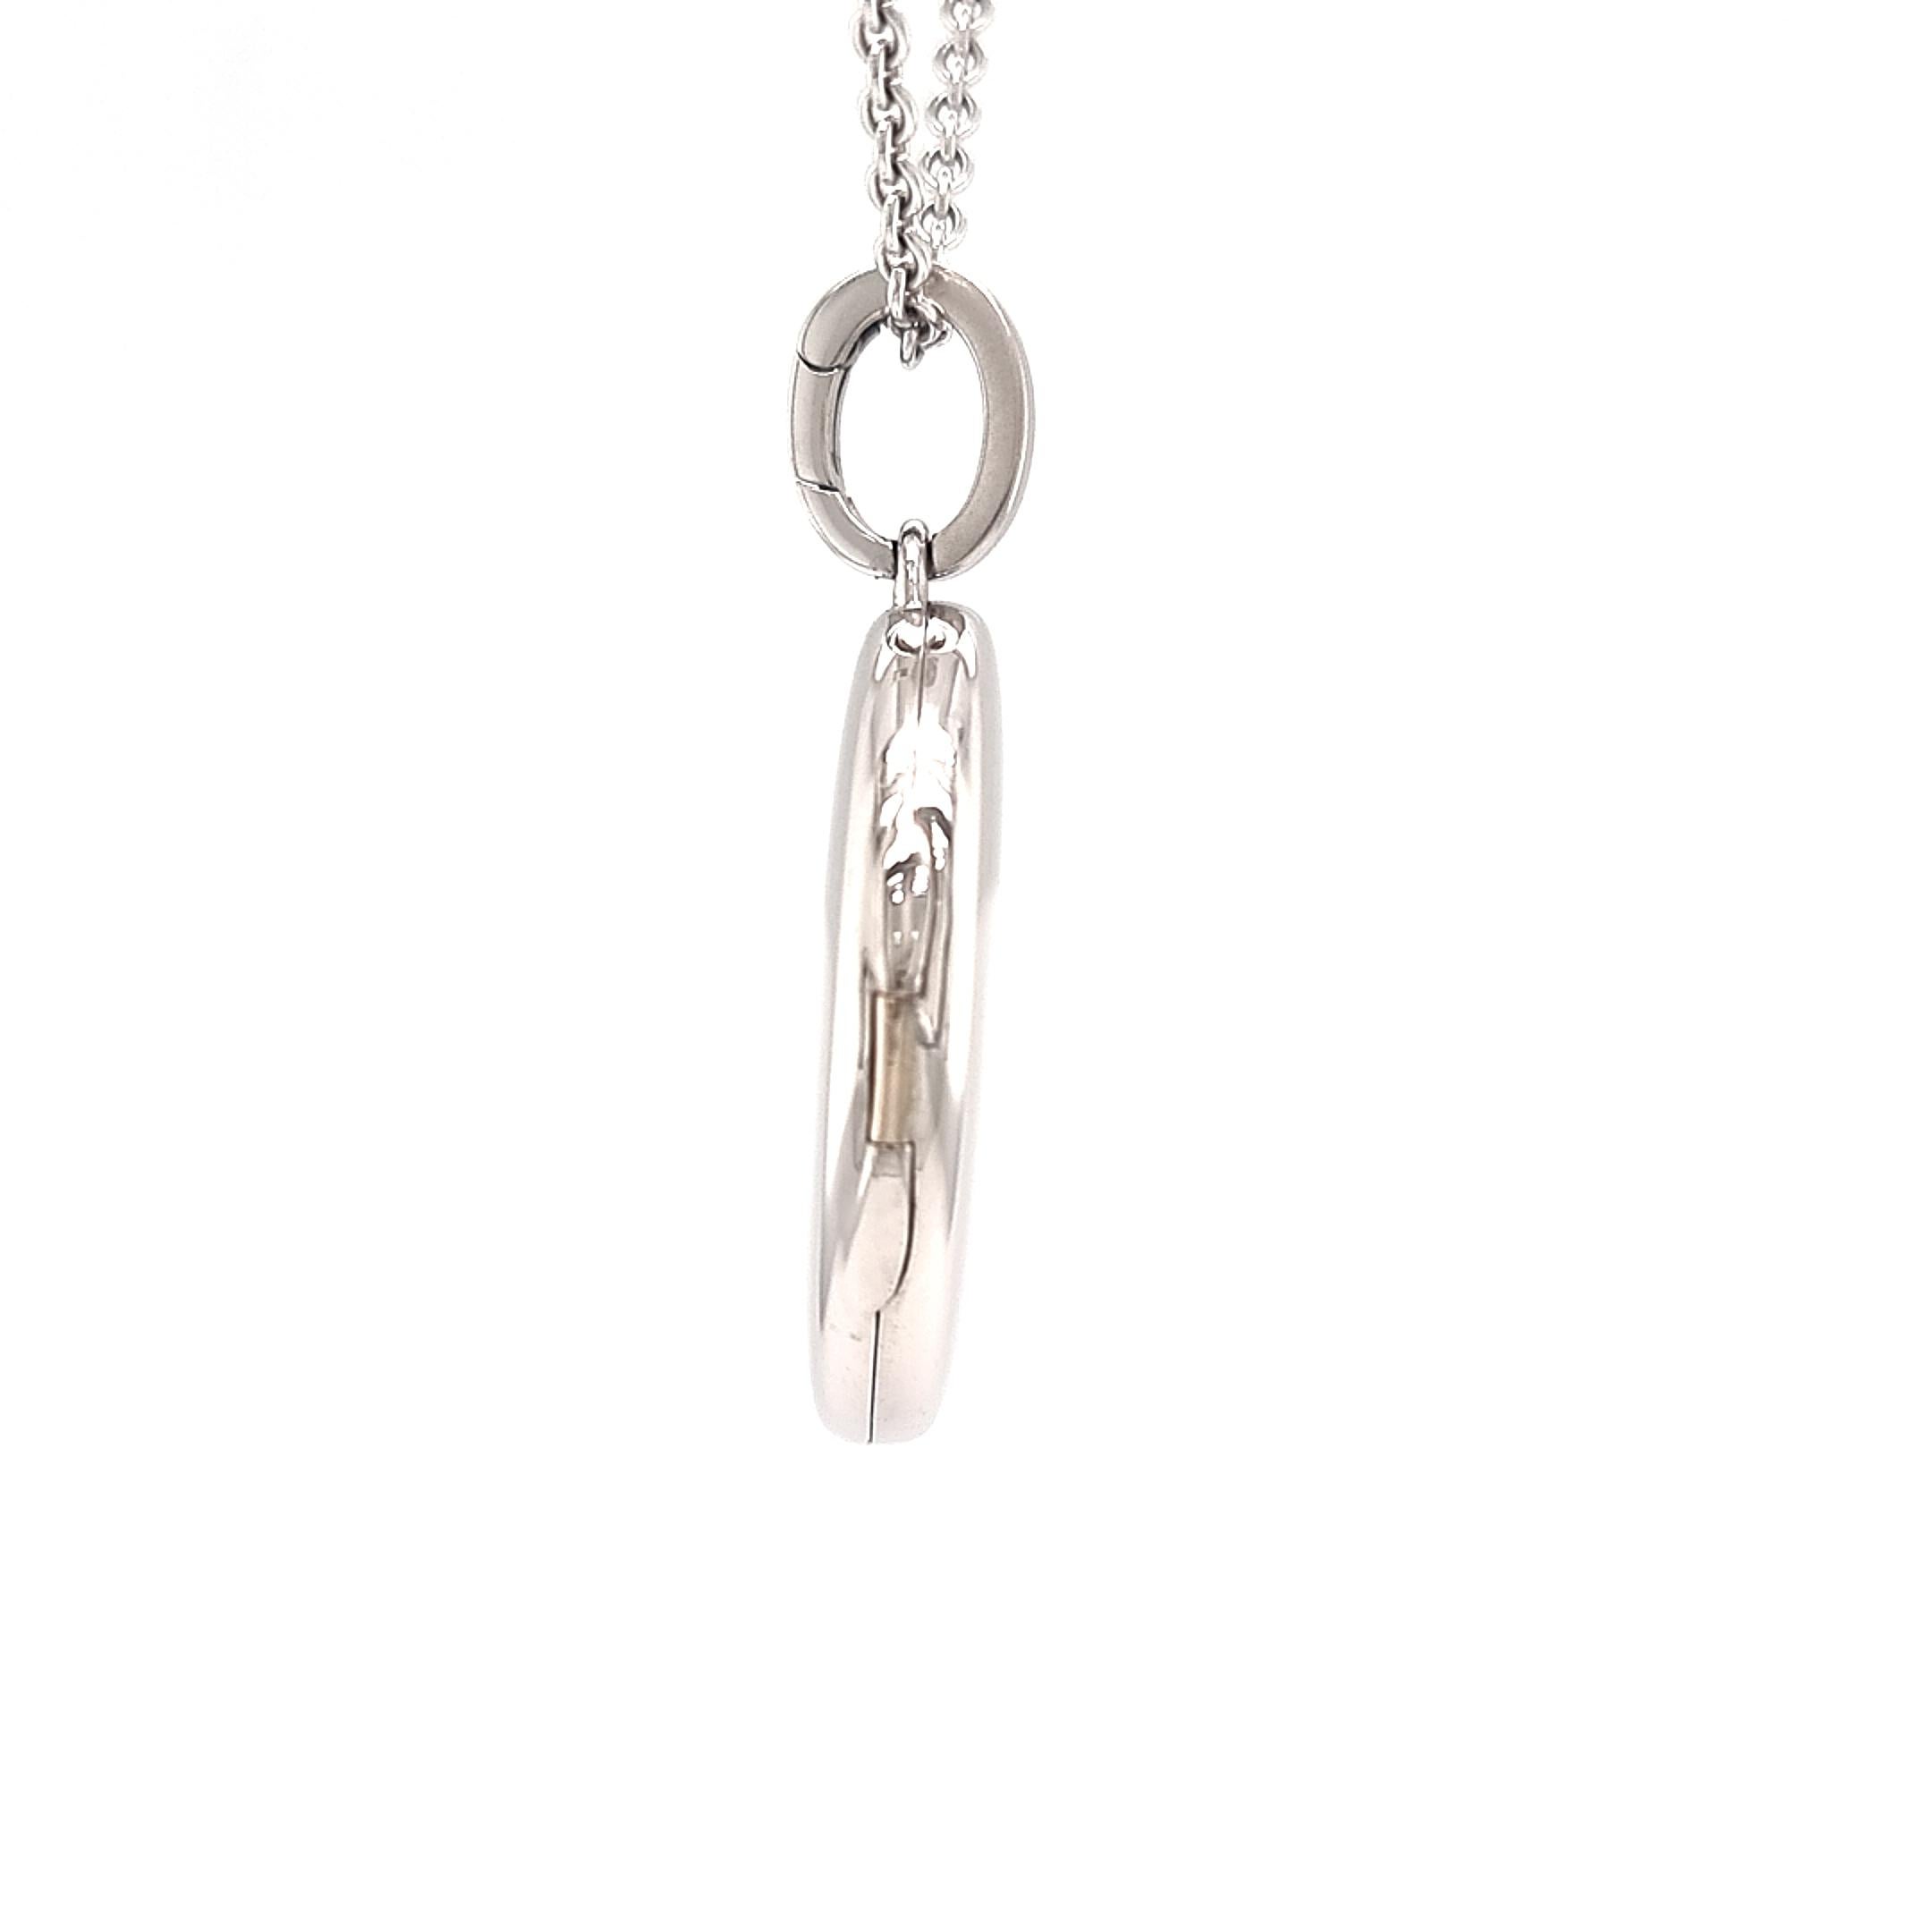 Brilliant Cut Oval Locket Pendant Necklace Solid 18k White Gold 4 Diamonds 0.04 Carat H VS For Sale